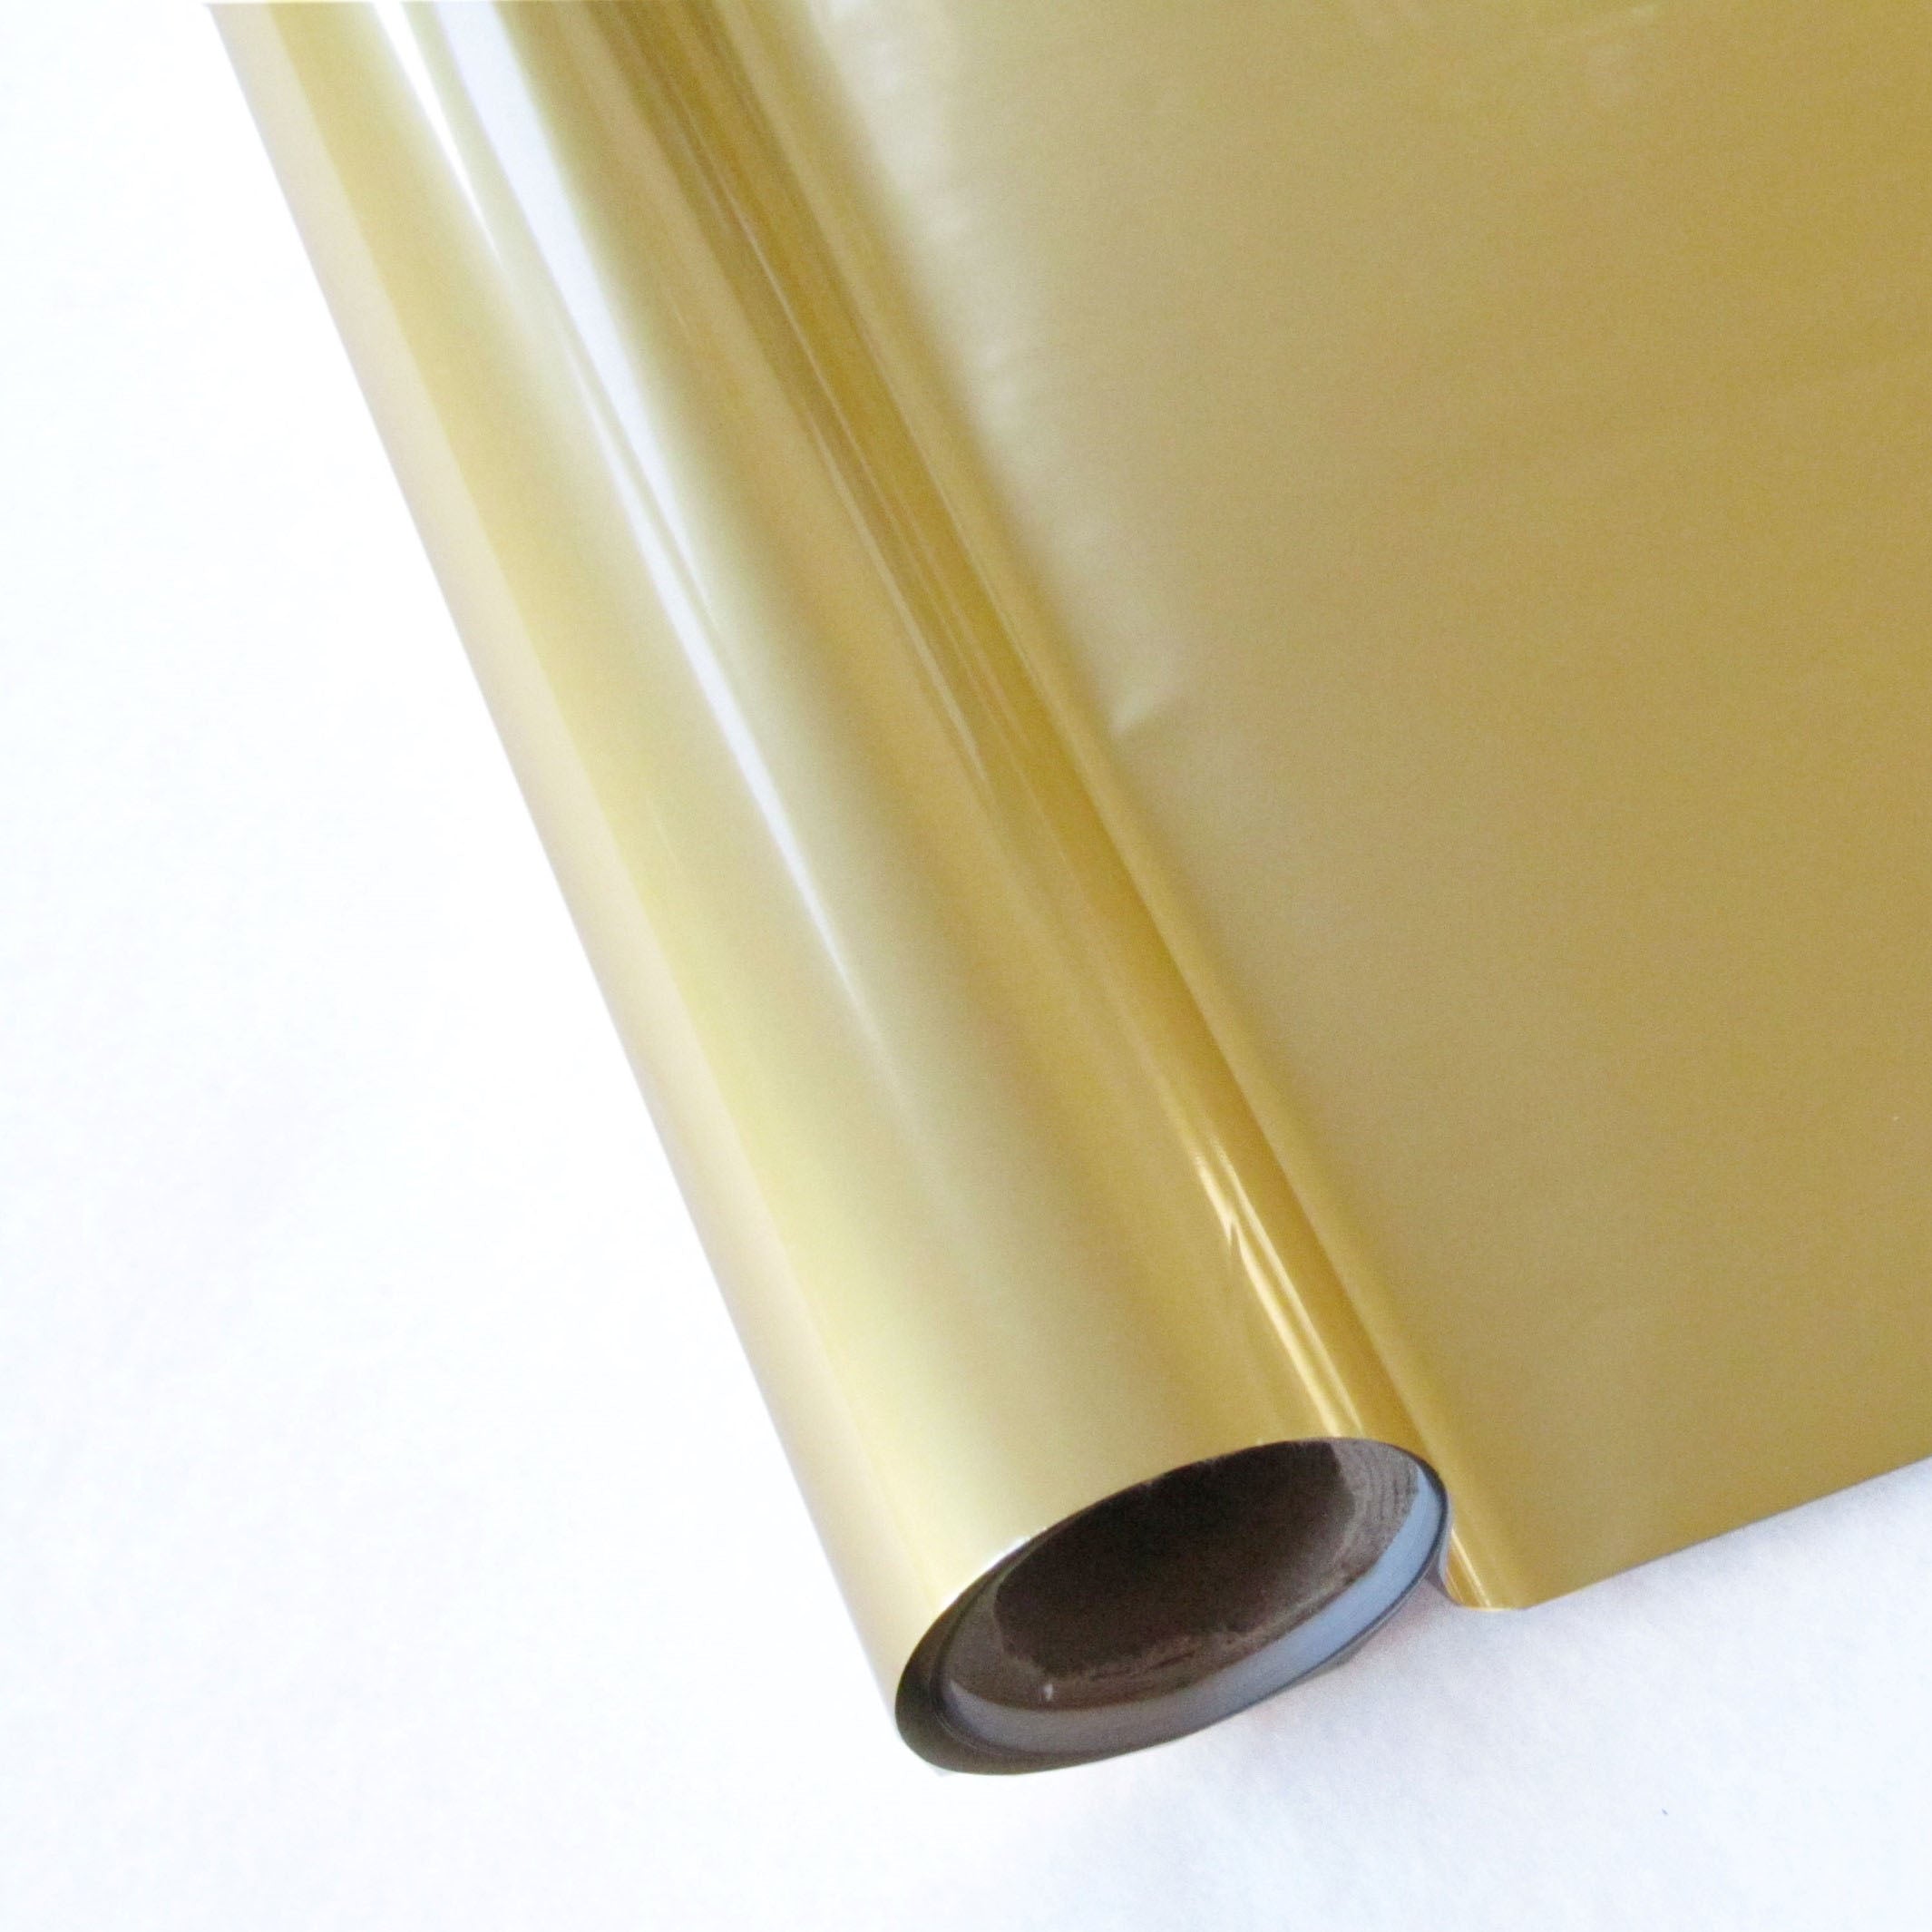 AMagic NH Olive Heat Transfer Foil - Create Shiny Metallic Designs